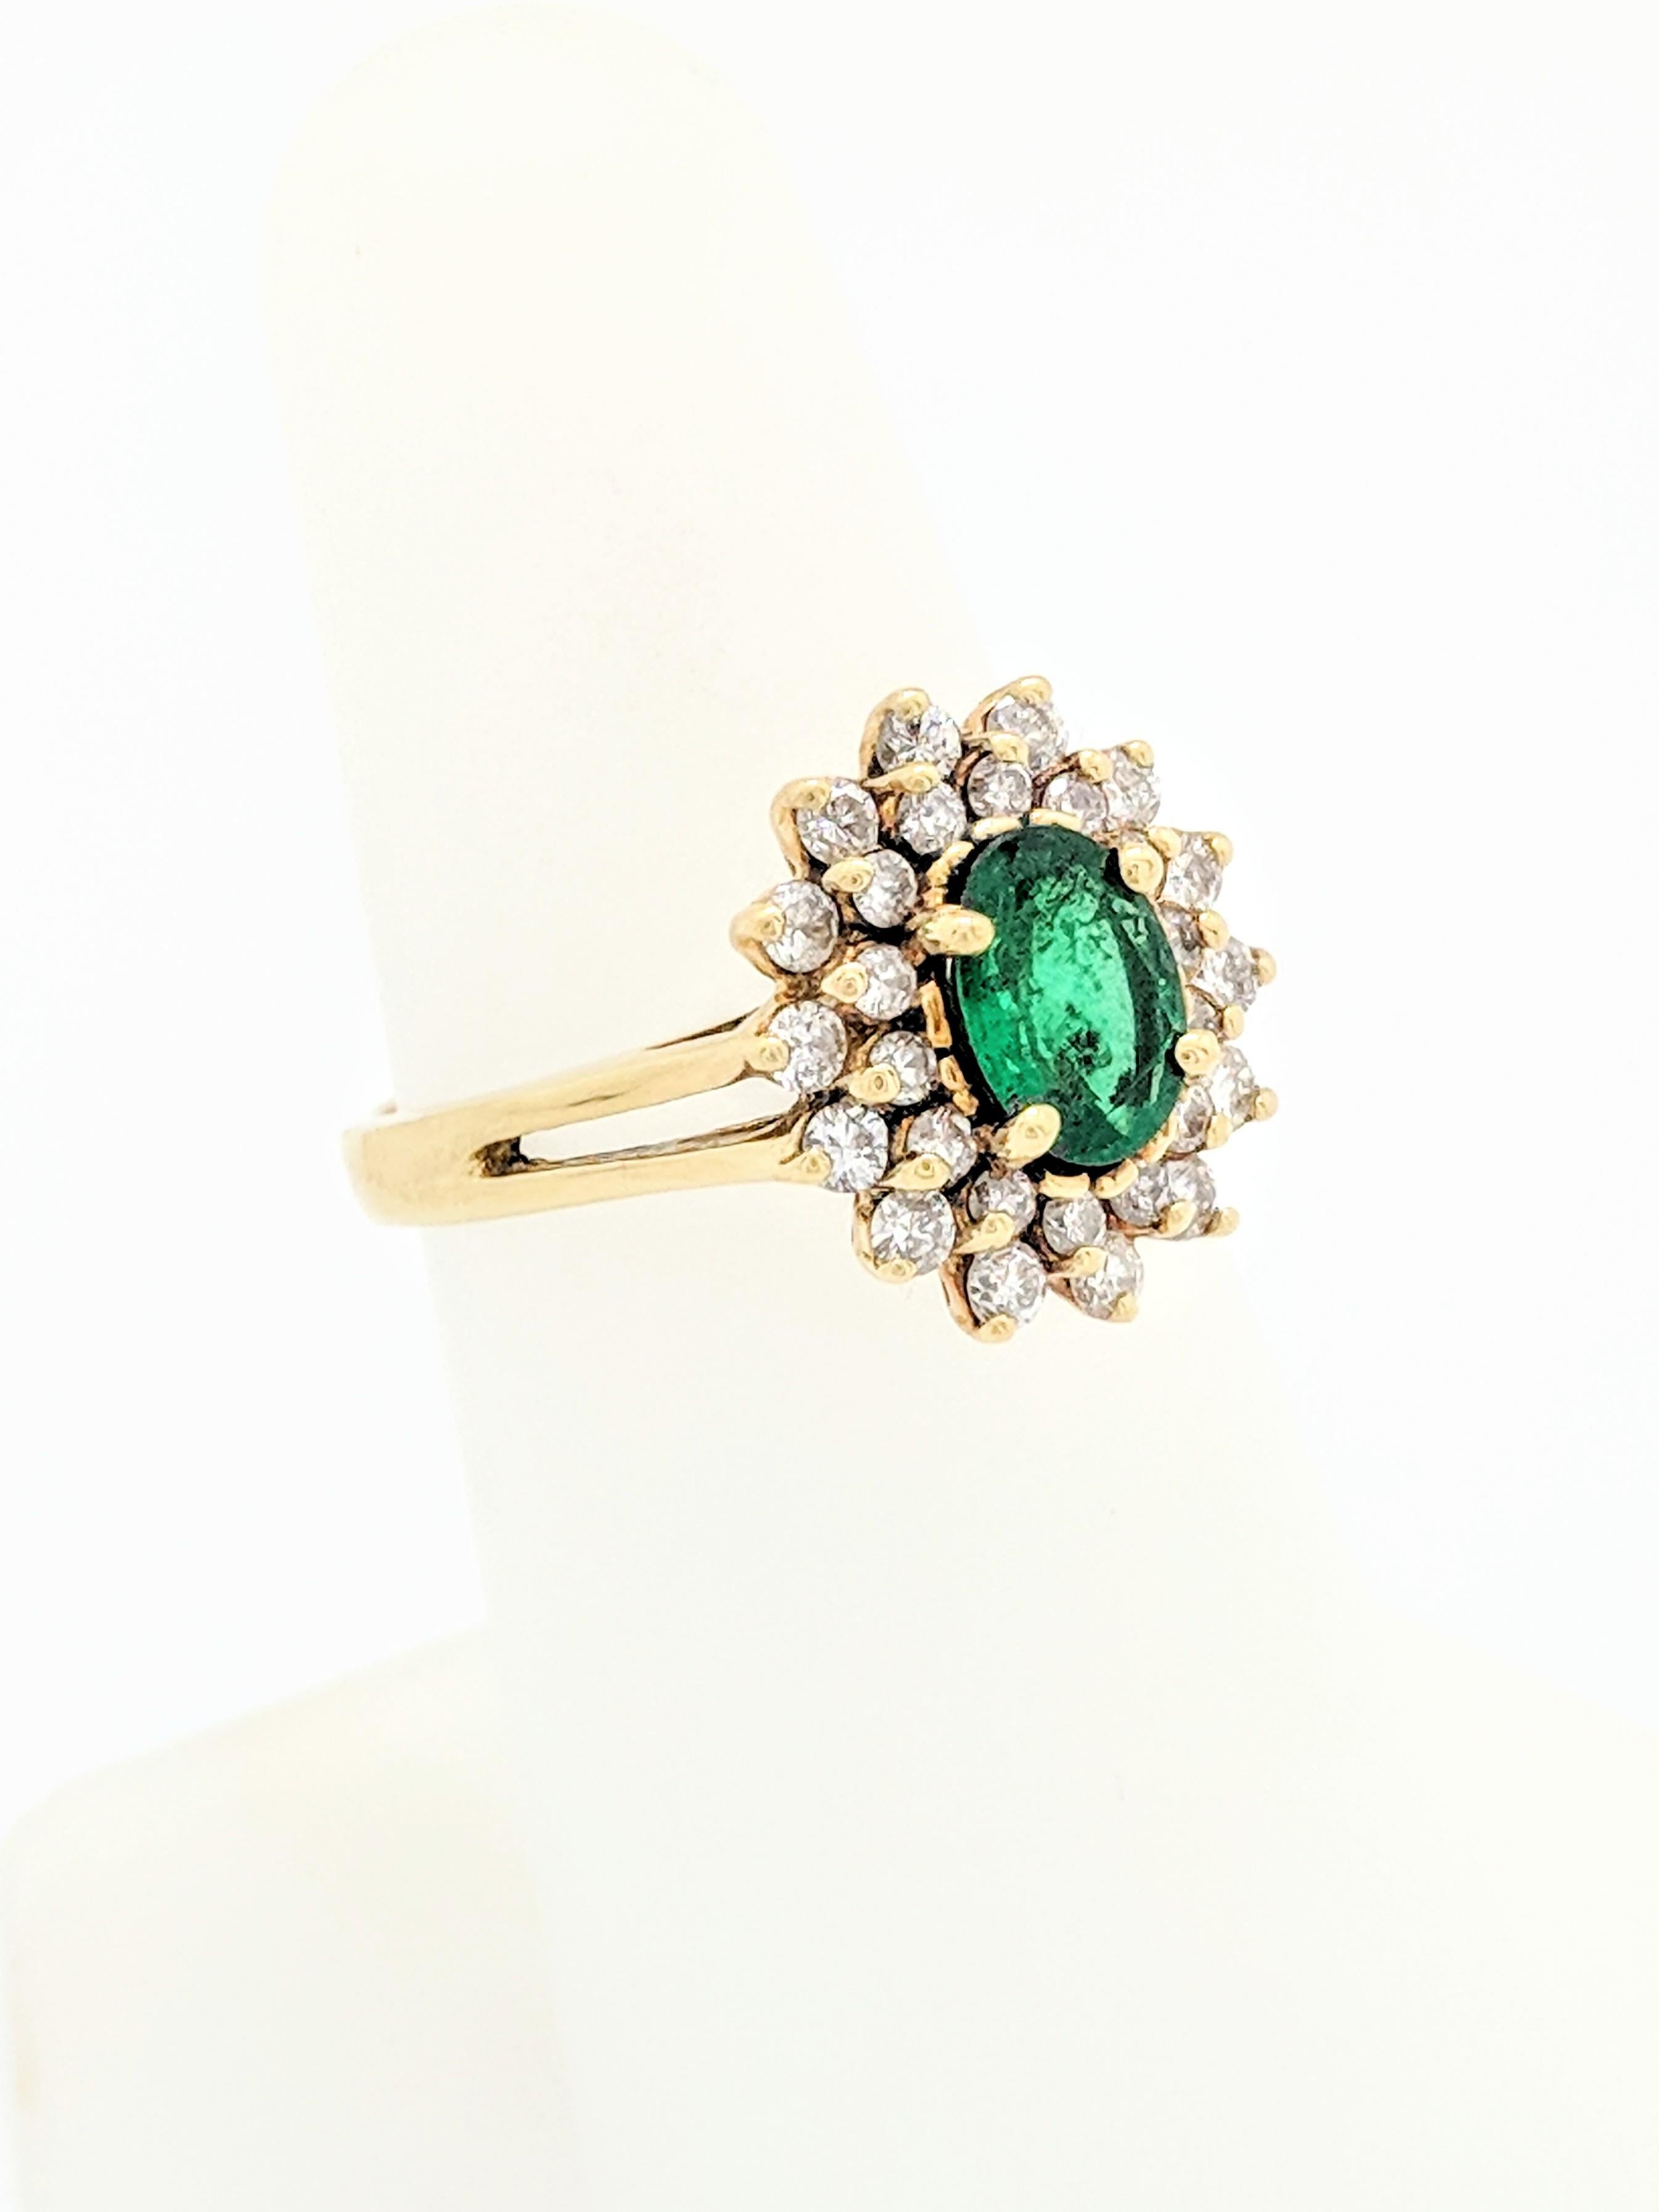 Art Nouveau 14 Karat Yellow Gold Emerald and Diamond Cocktail Ring